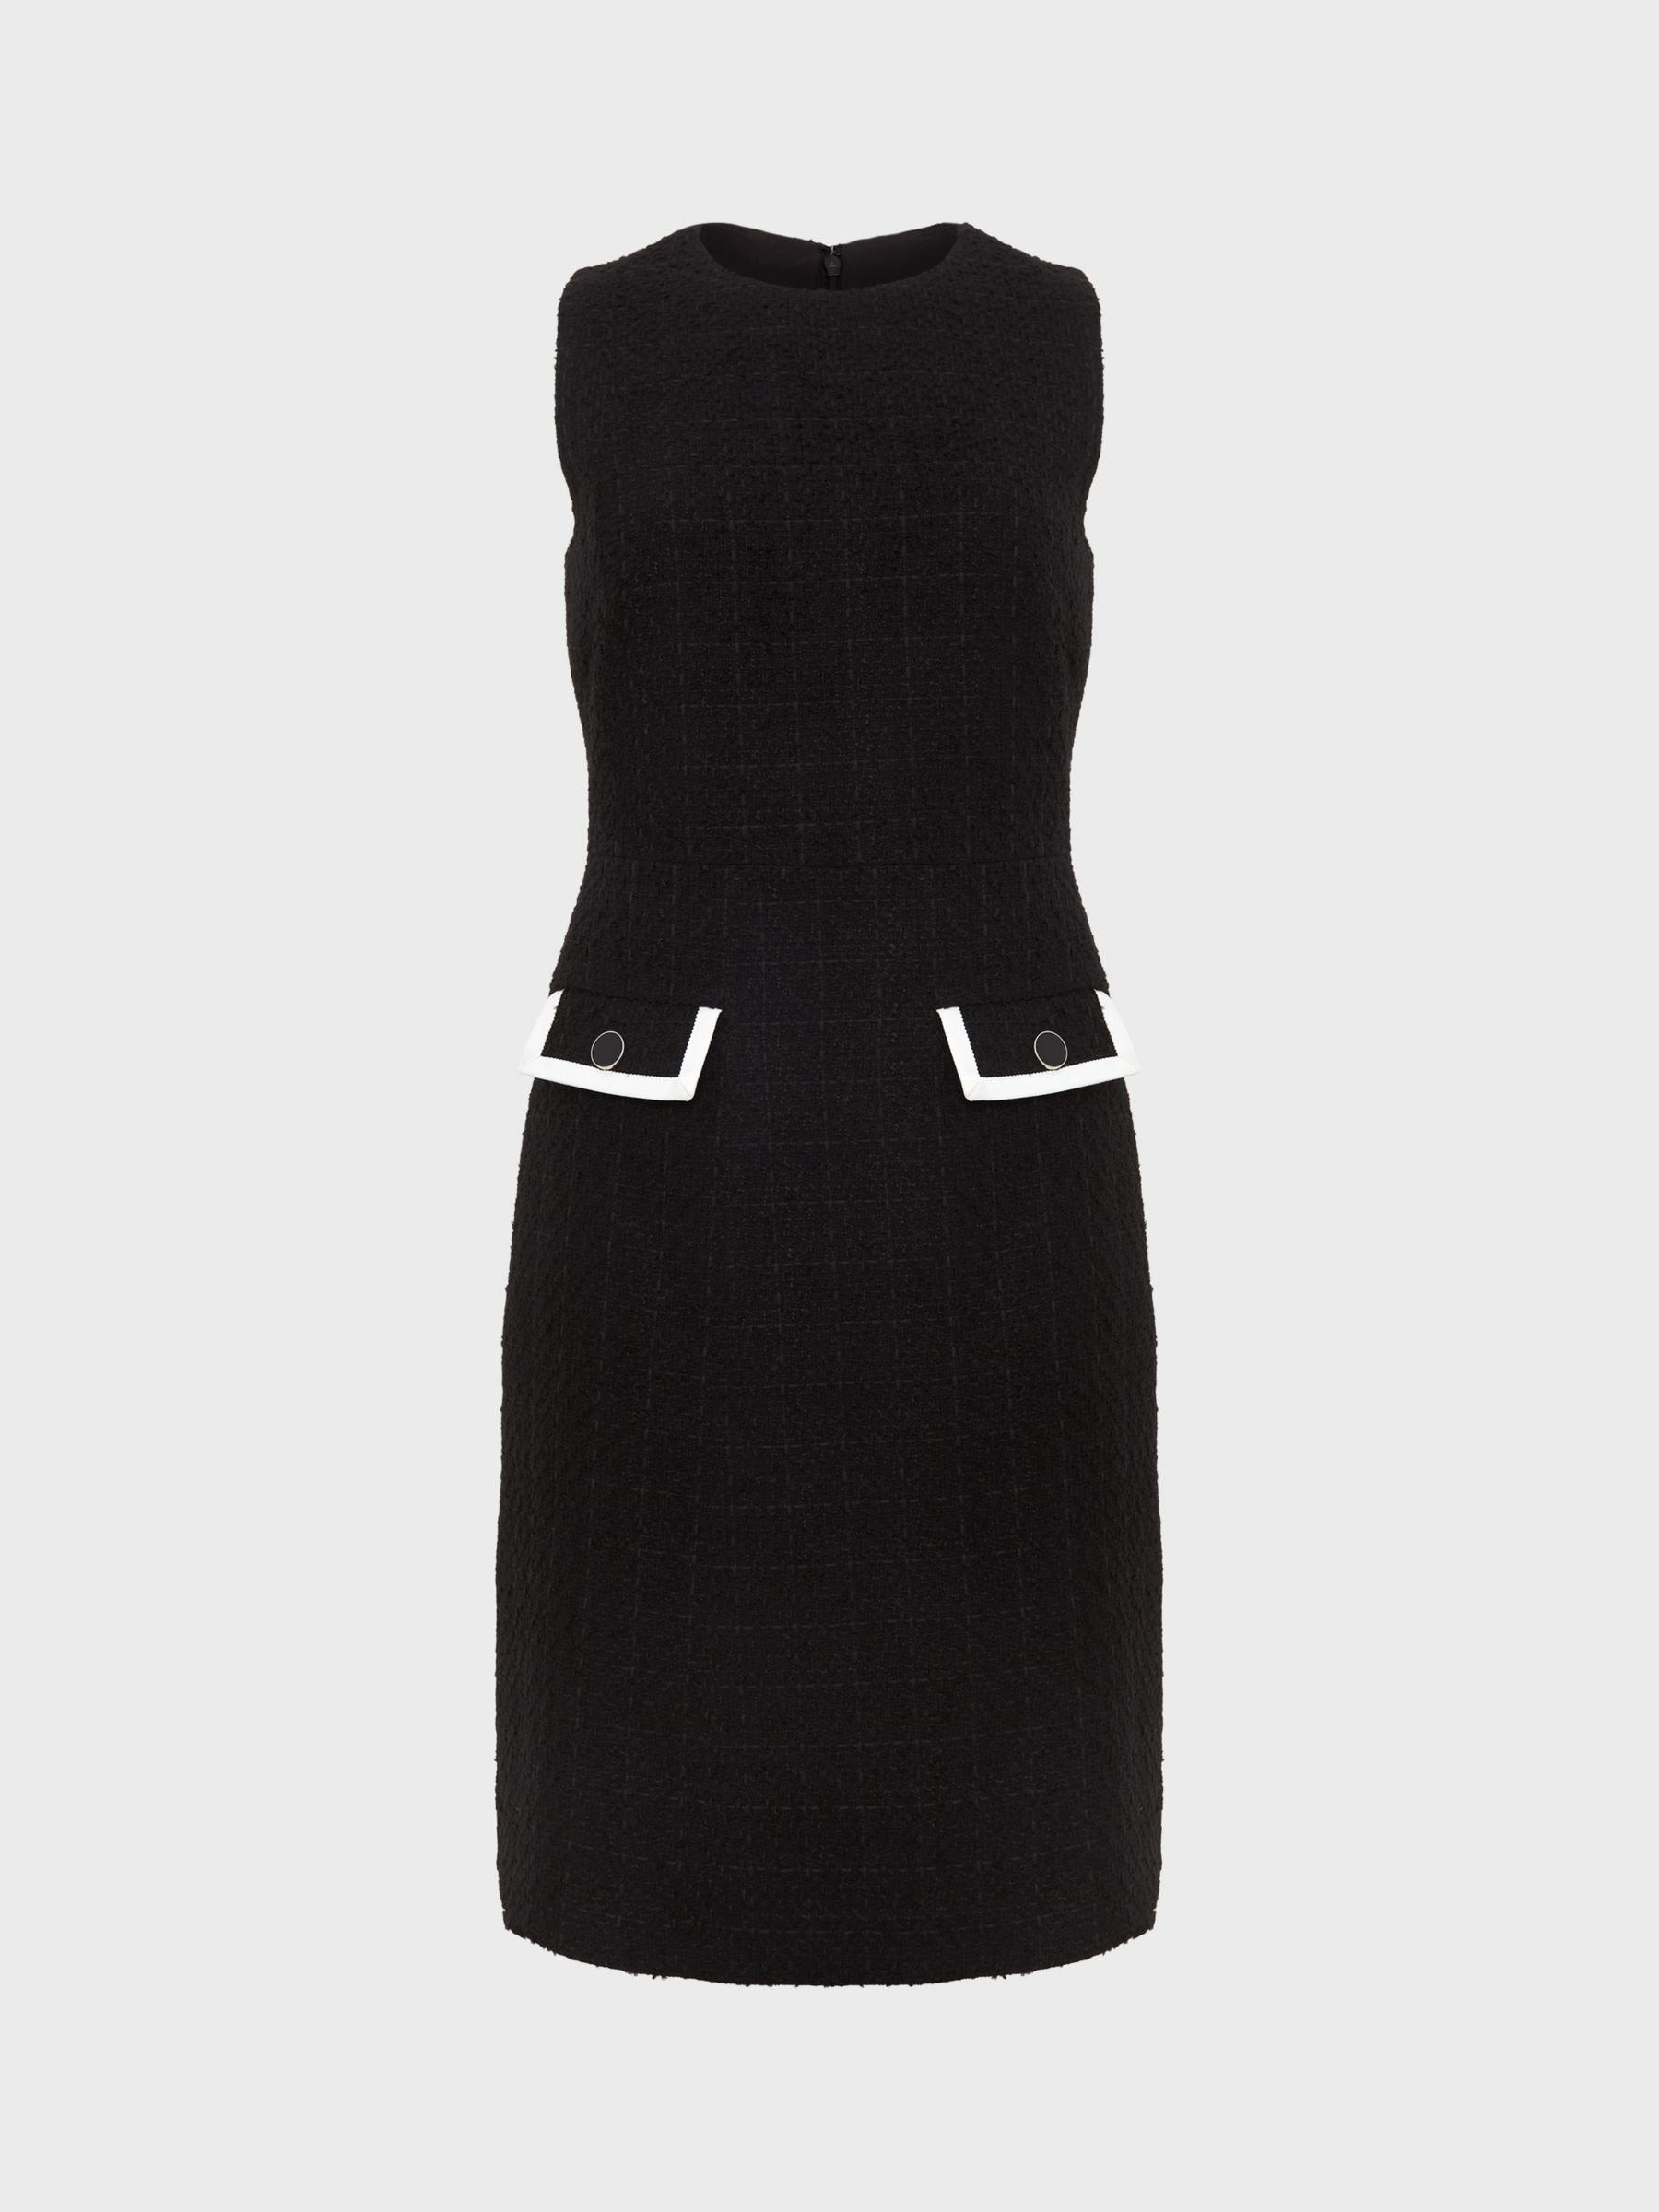 Hobbs Cici Sheath Dress, Black/Ivory at John Lewis & Partners